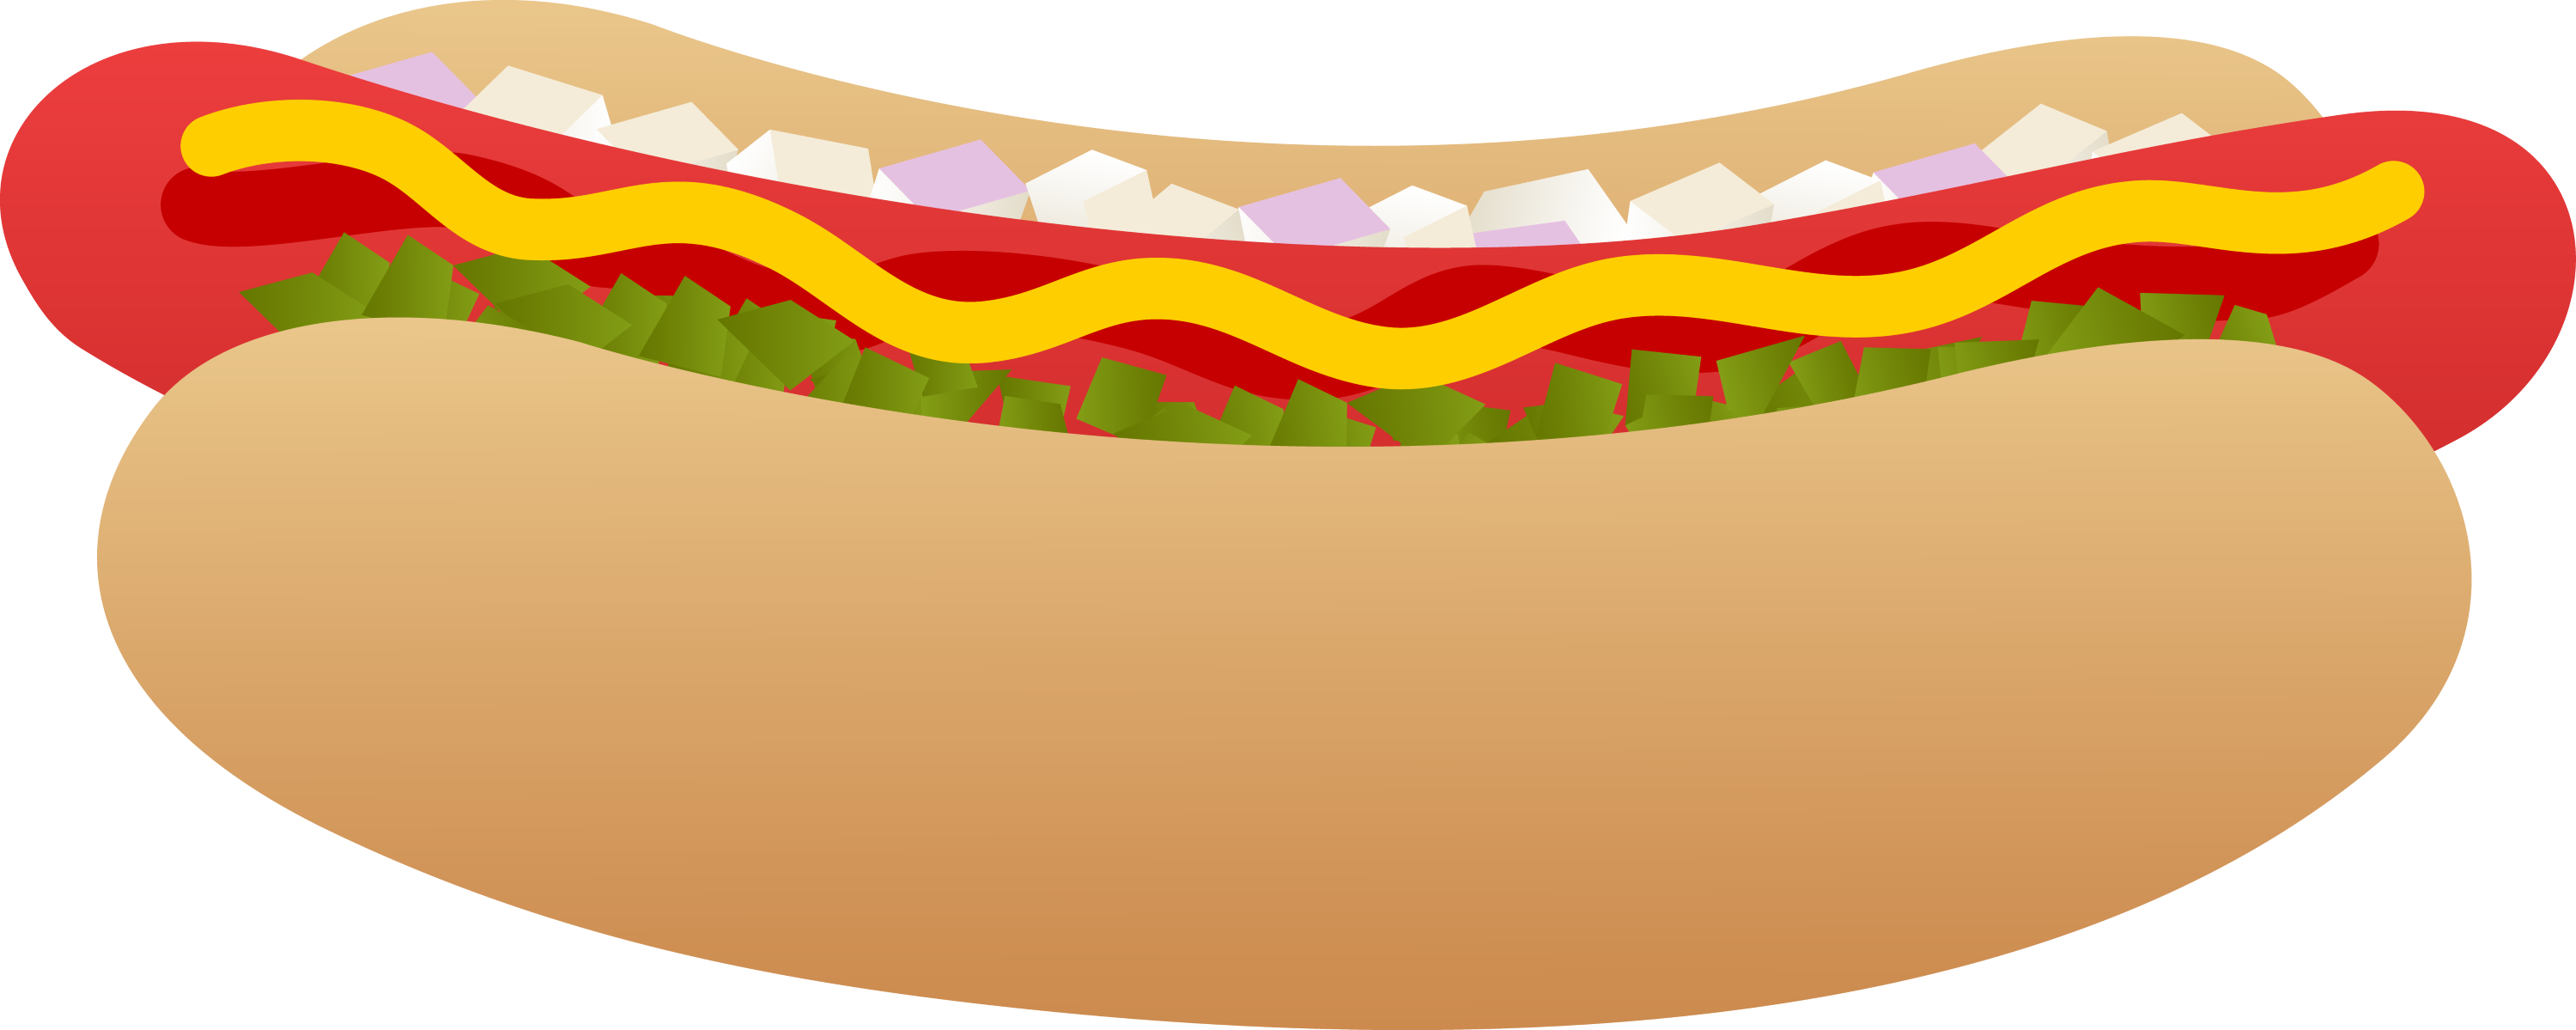 clipart hot dog free - photo #18